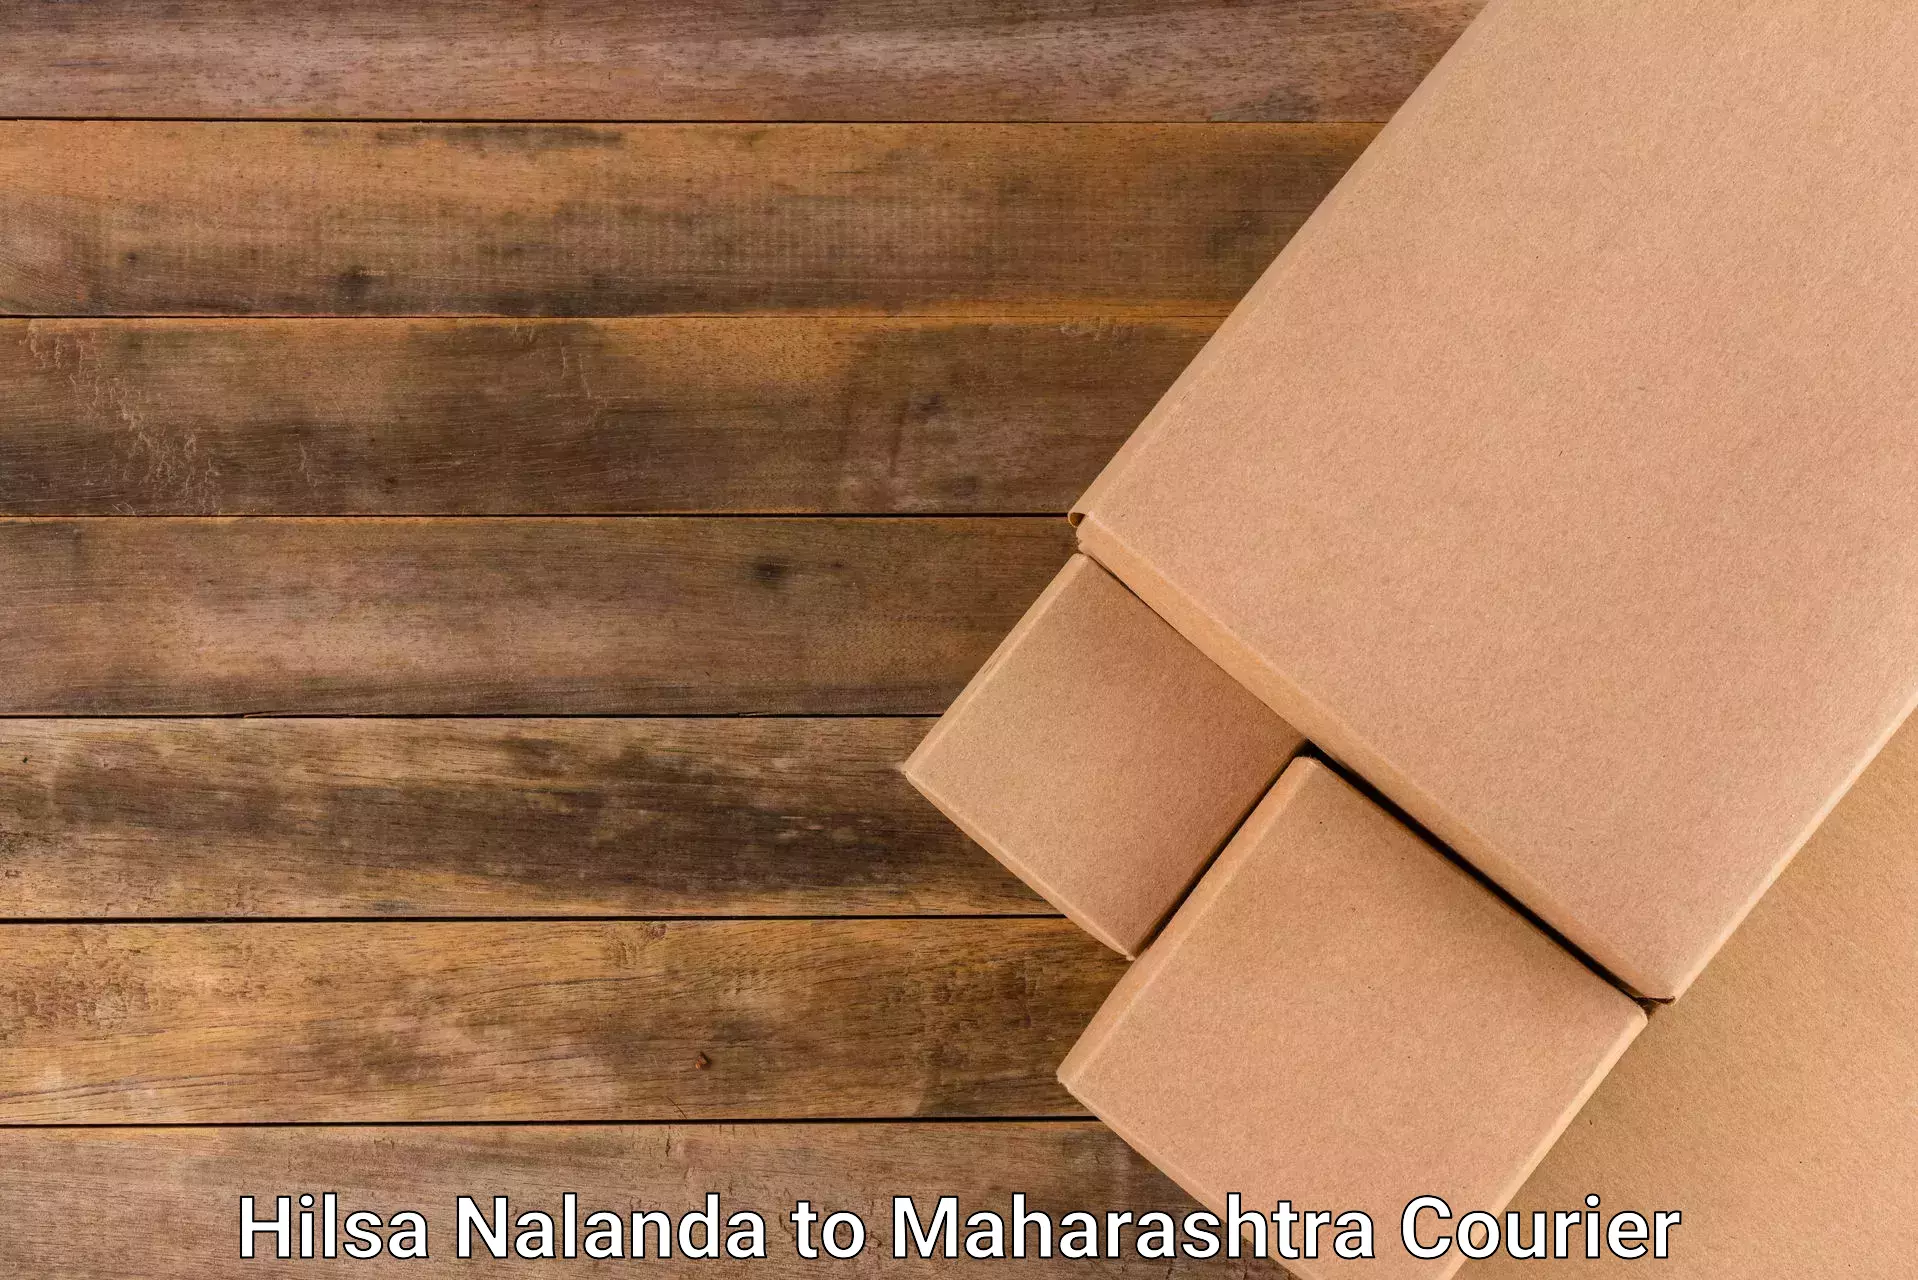 Multi-national courier services Hilsa Nalanda to Mandrup